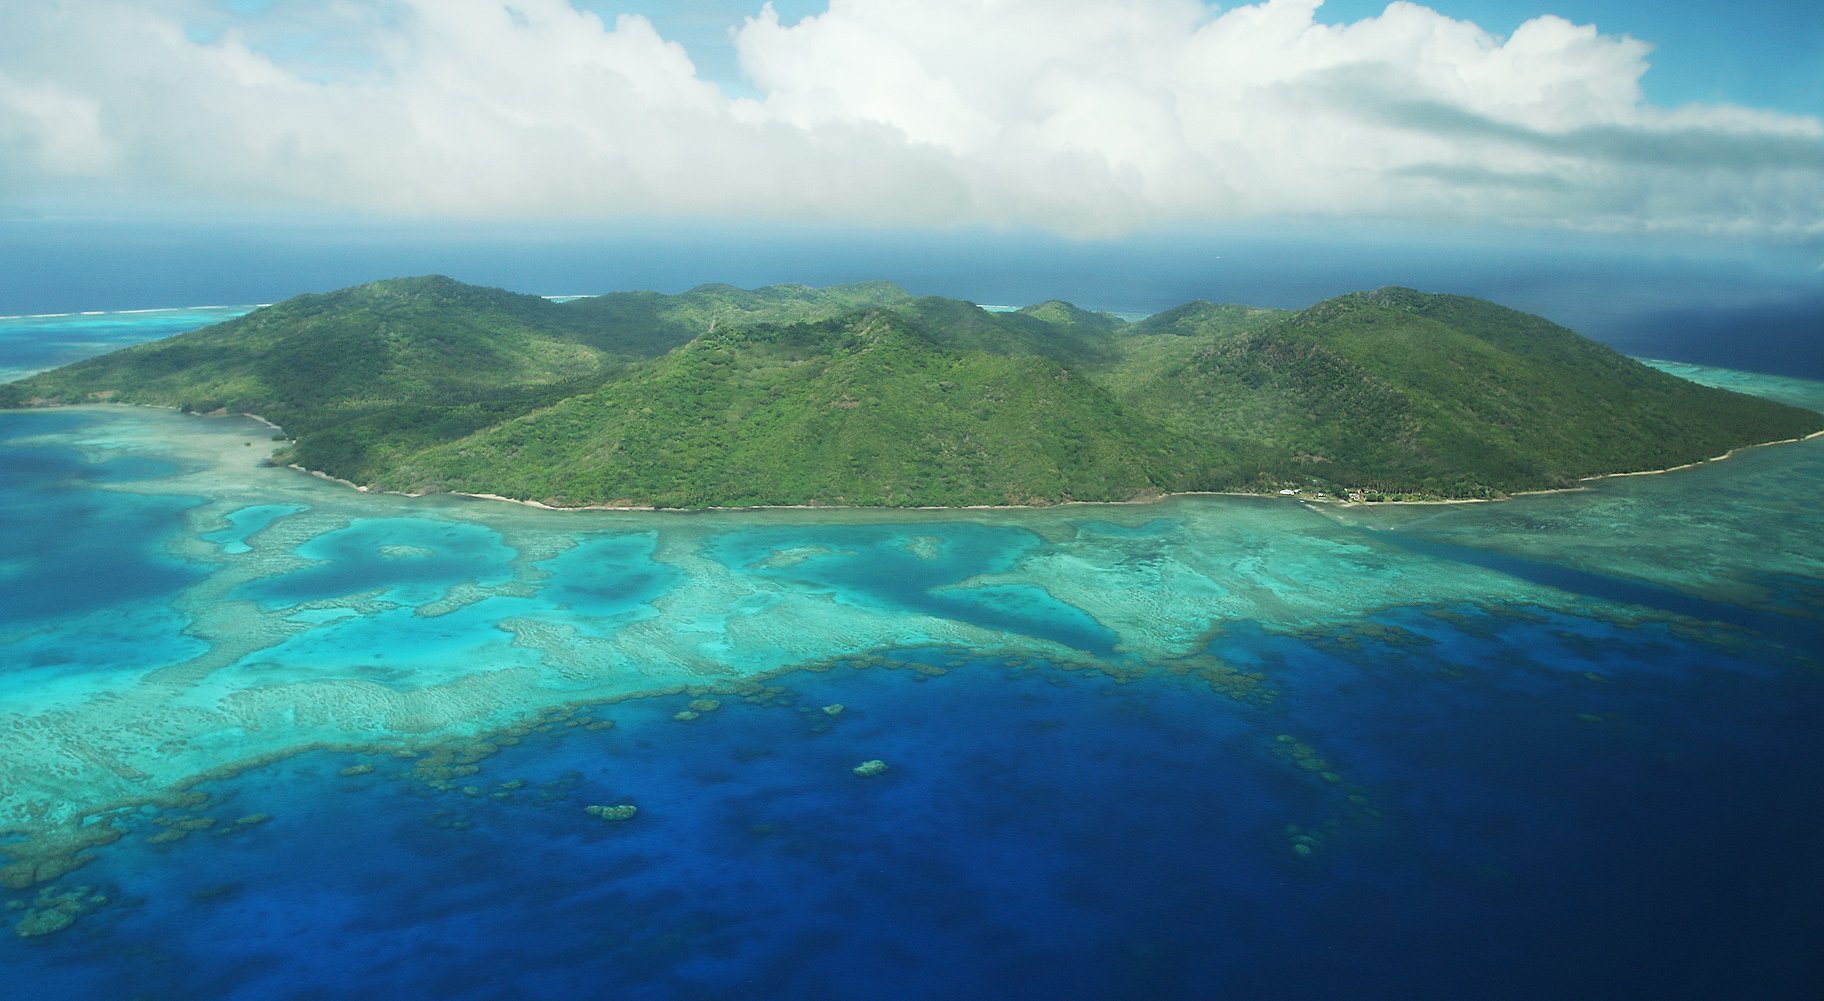 Центр тихого океана. Острова Лау, Фиджи. Фиджи Атолл. Каролинские острова Атолл. Коморские острова (архипелаг).